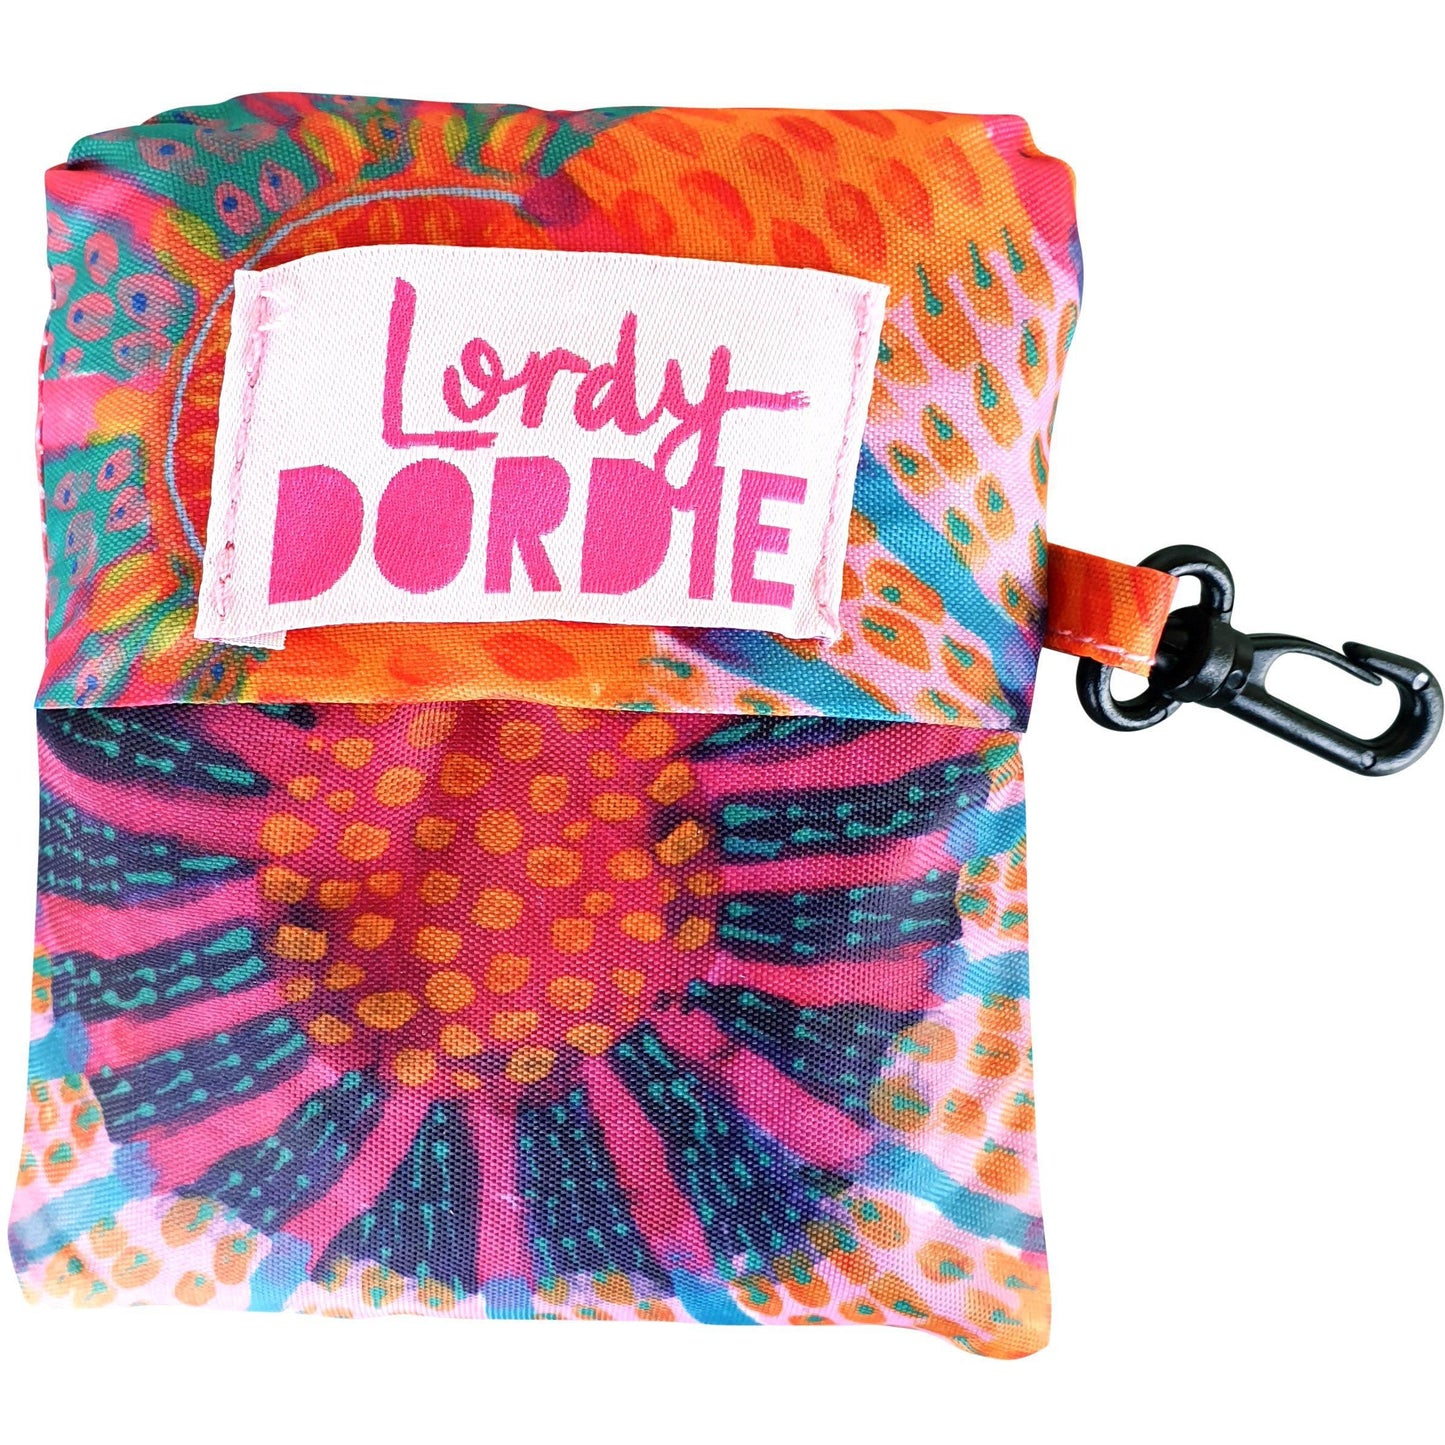 XLarge Foldaway Shopper Tote - Lordy Dordie Art